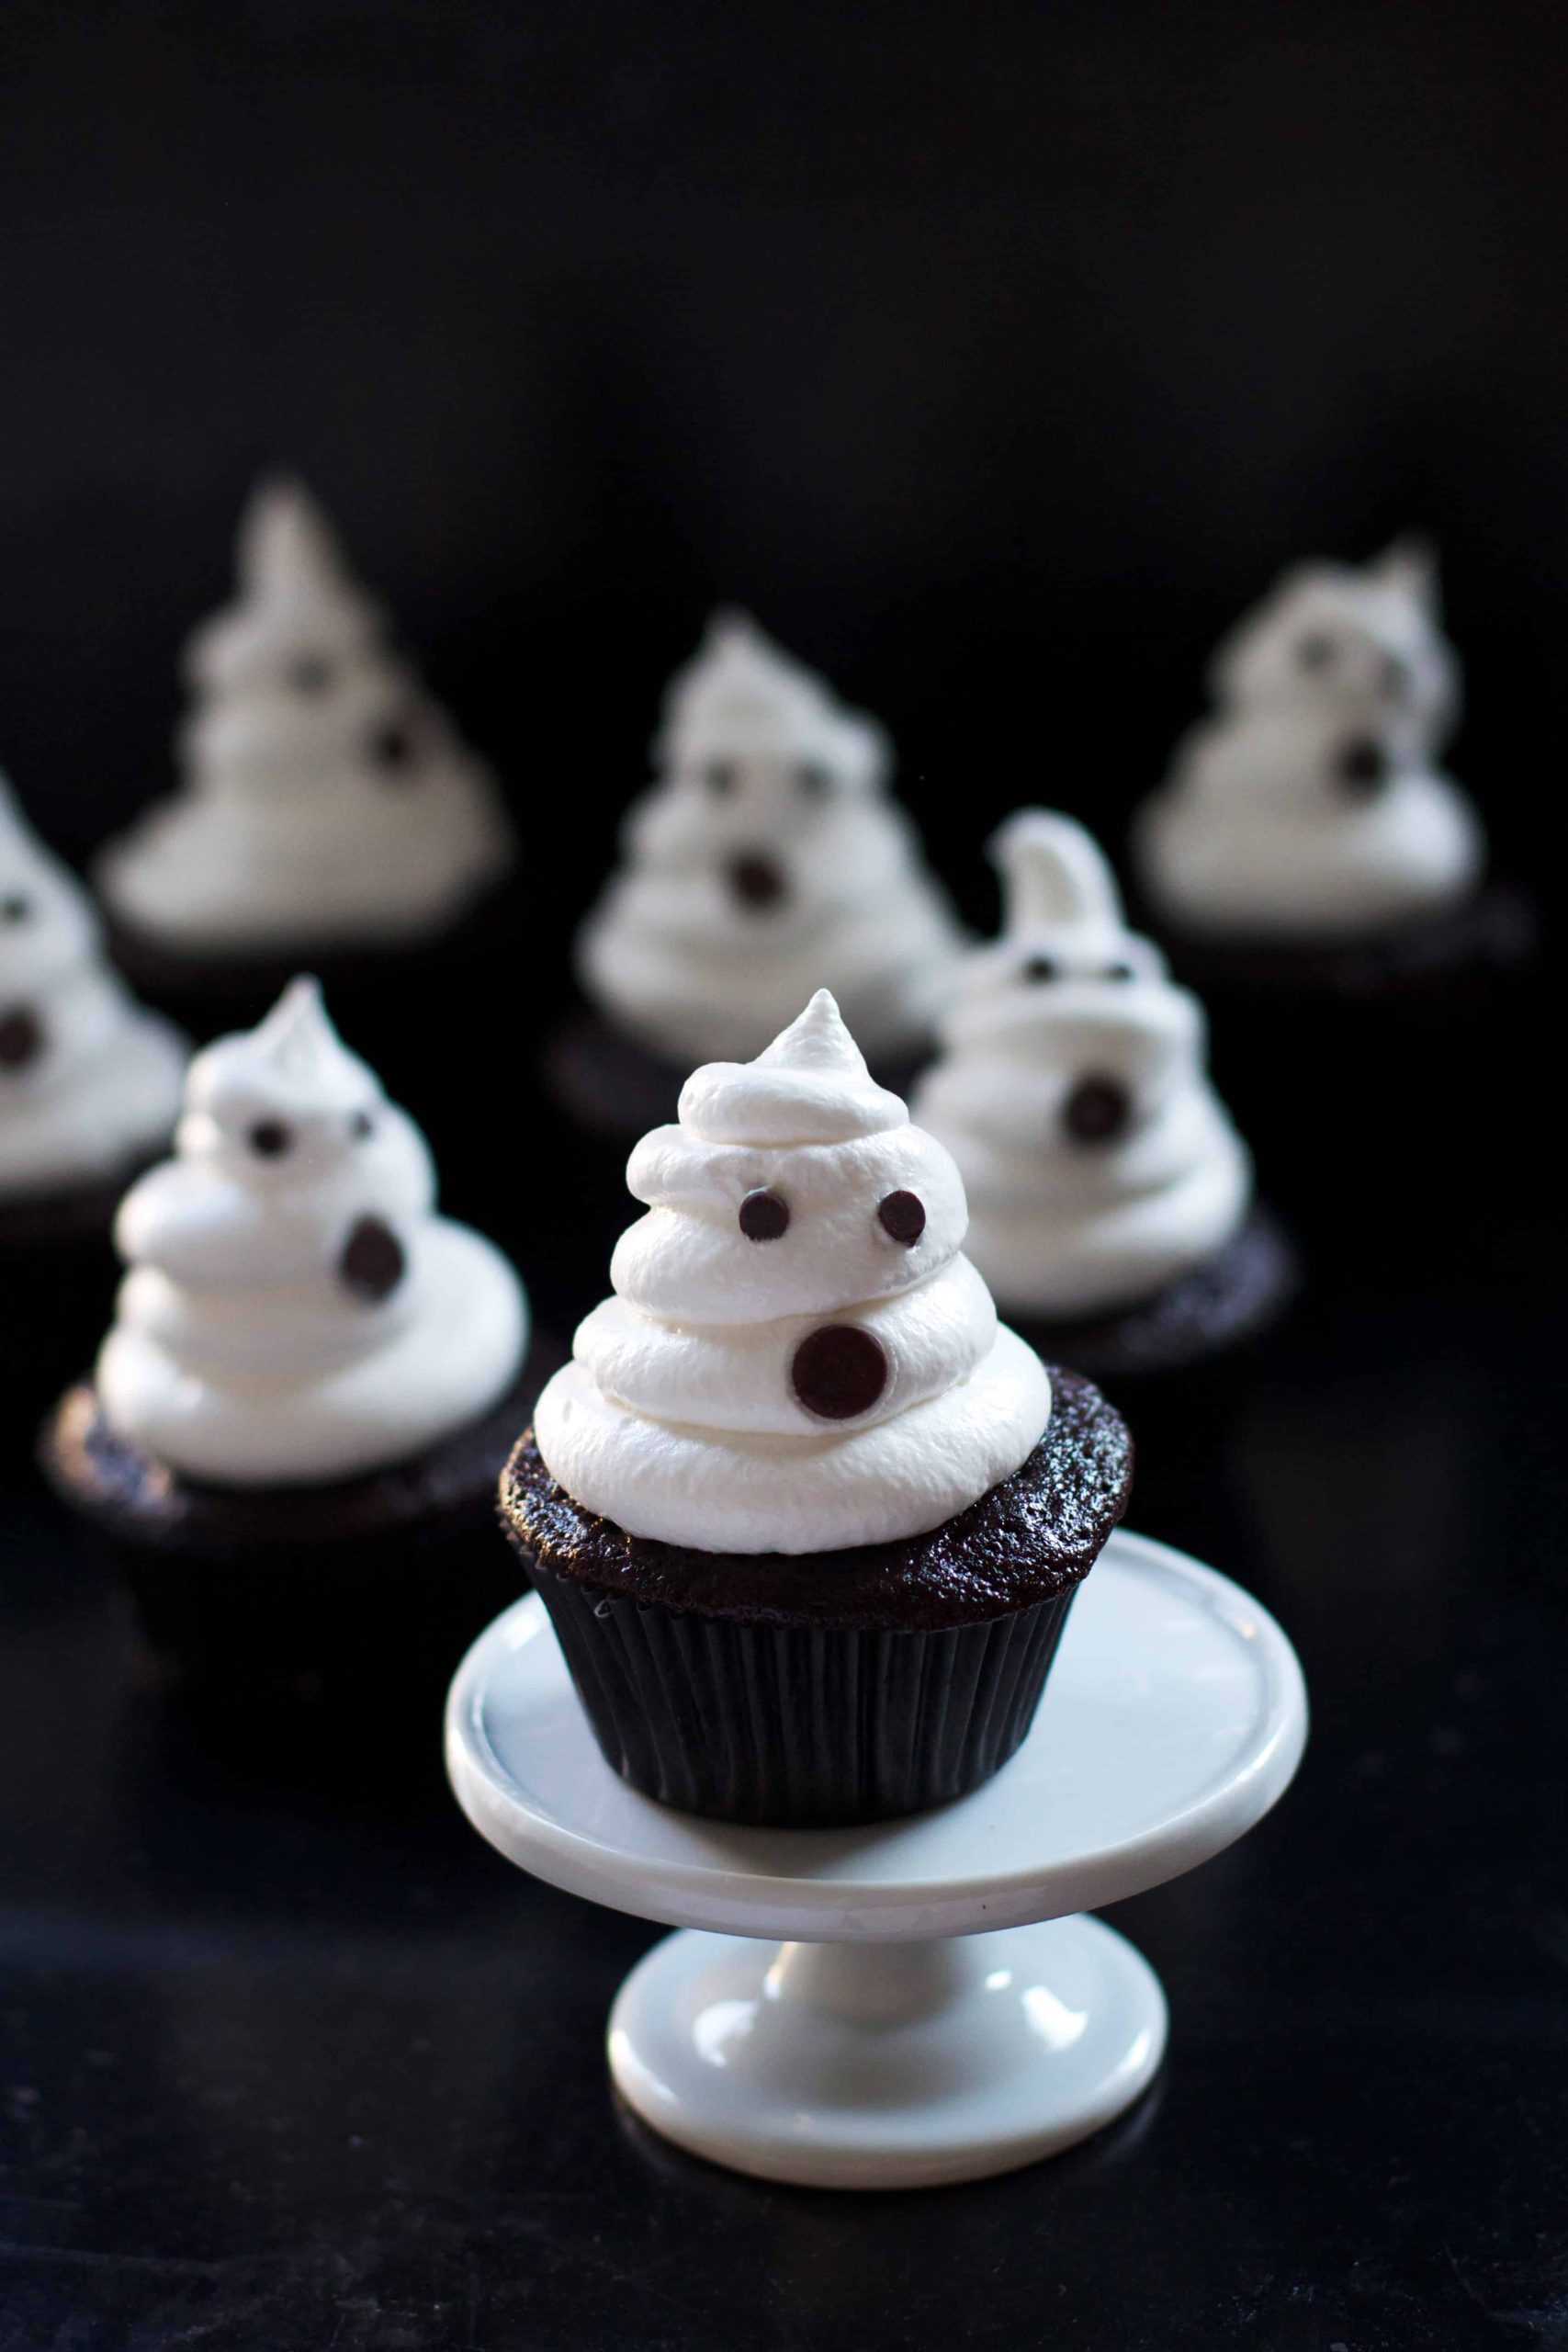 Best Glow in the Dark Cupcakes + Glow in the Dark Frosting Recipe